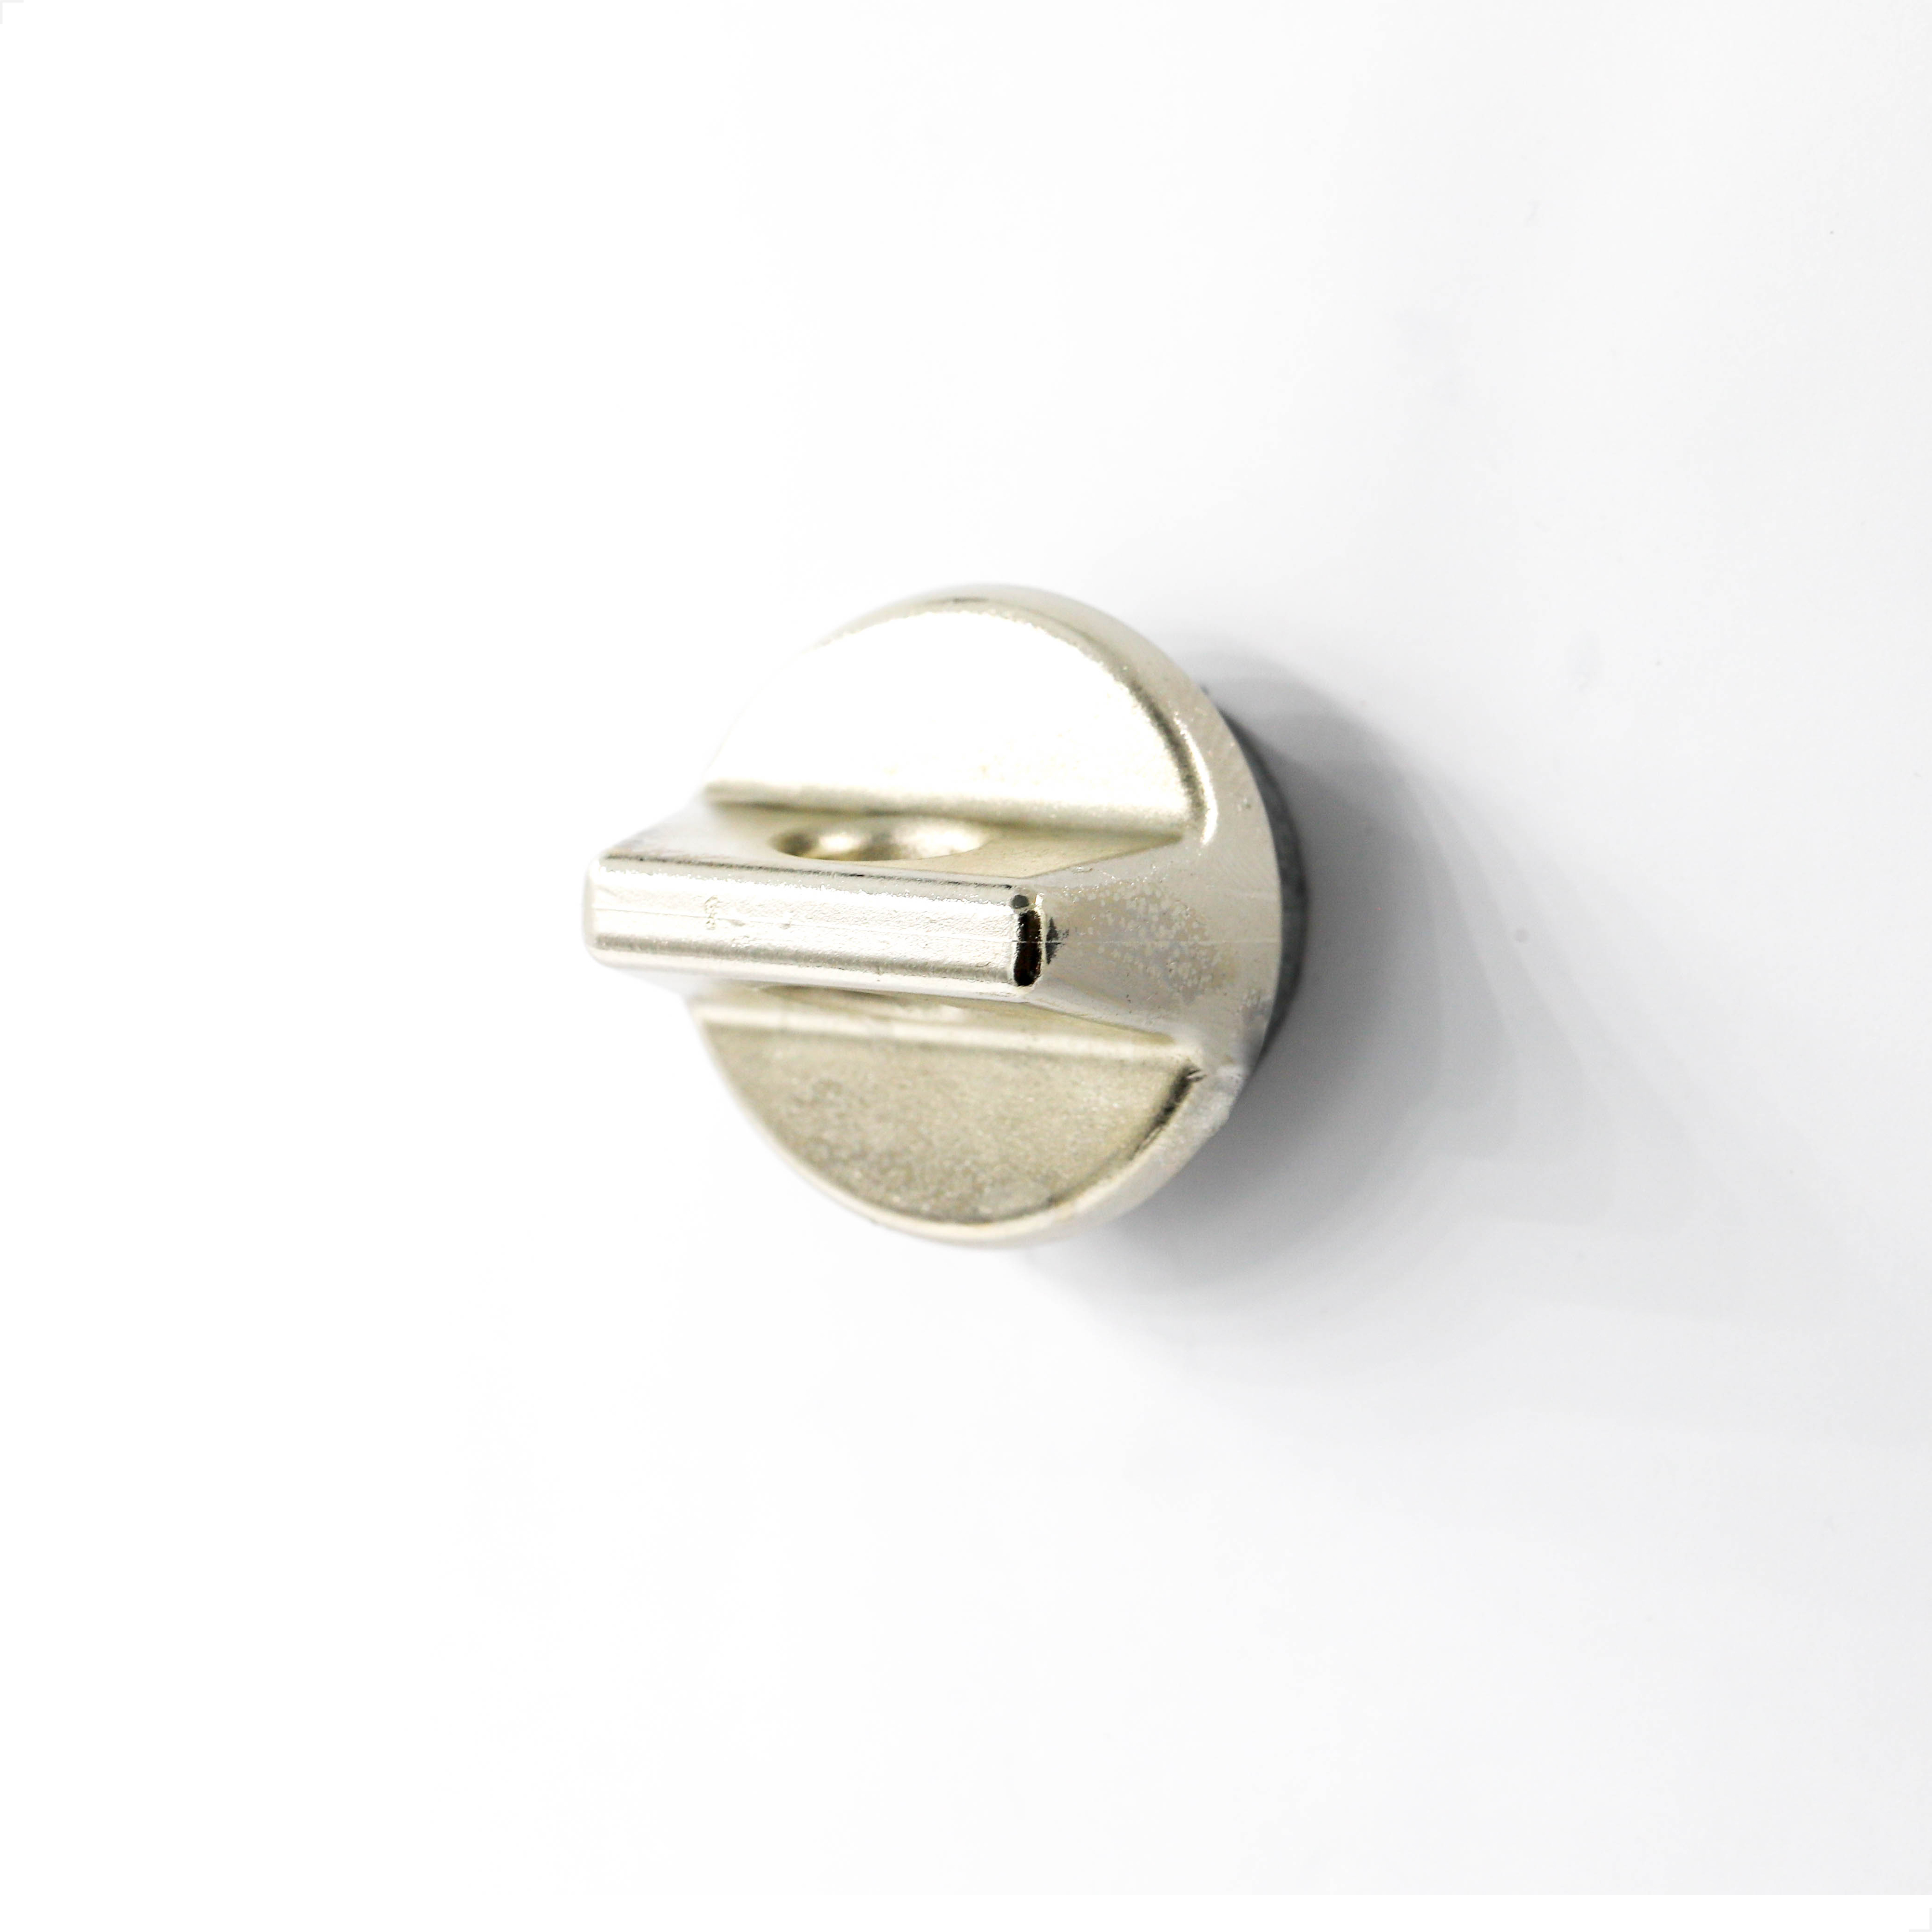 Locker lock/ Basis-sash lock W-VRB-01 packaging unit